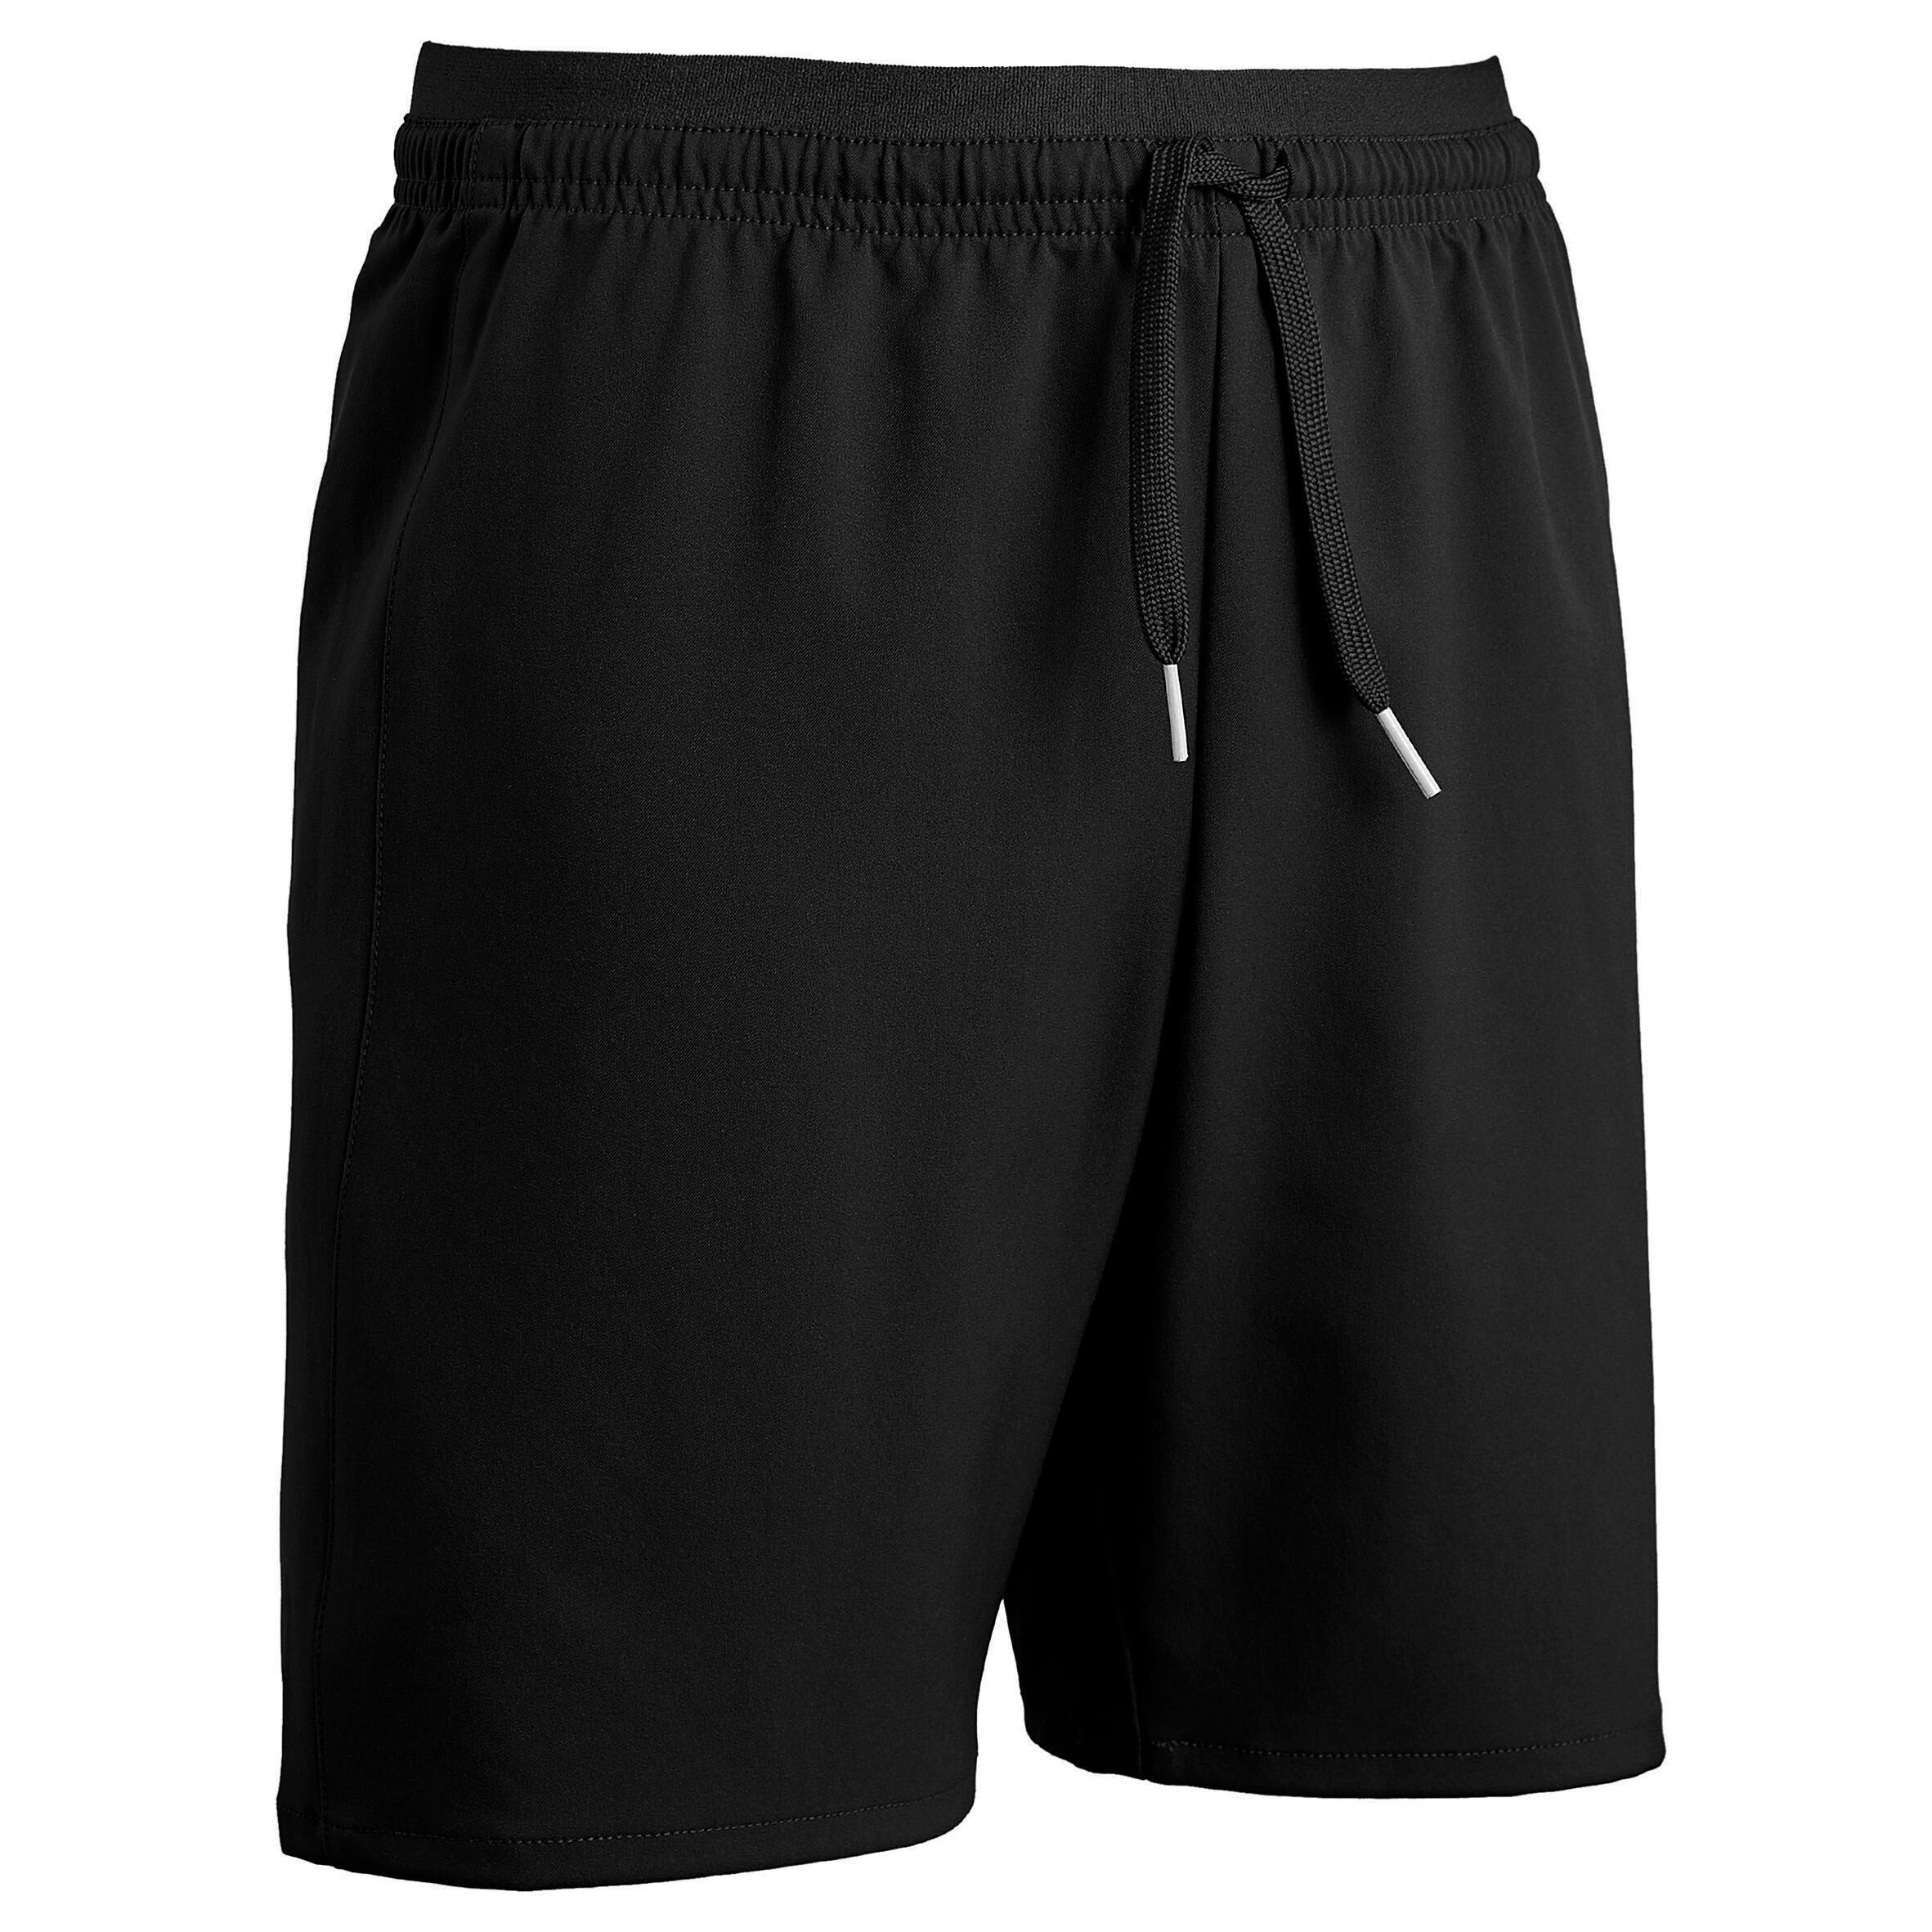 KIPSTA F500 Kids Football Shorts - Black